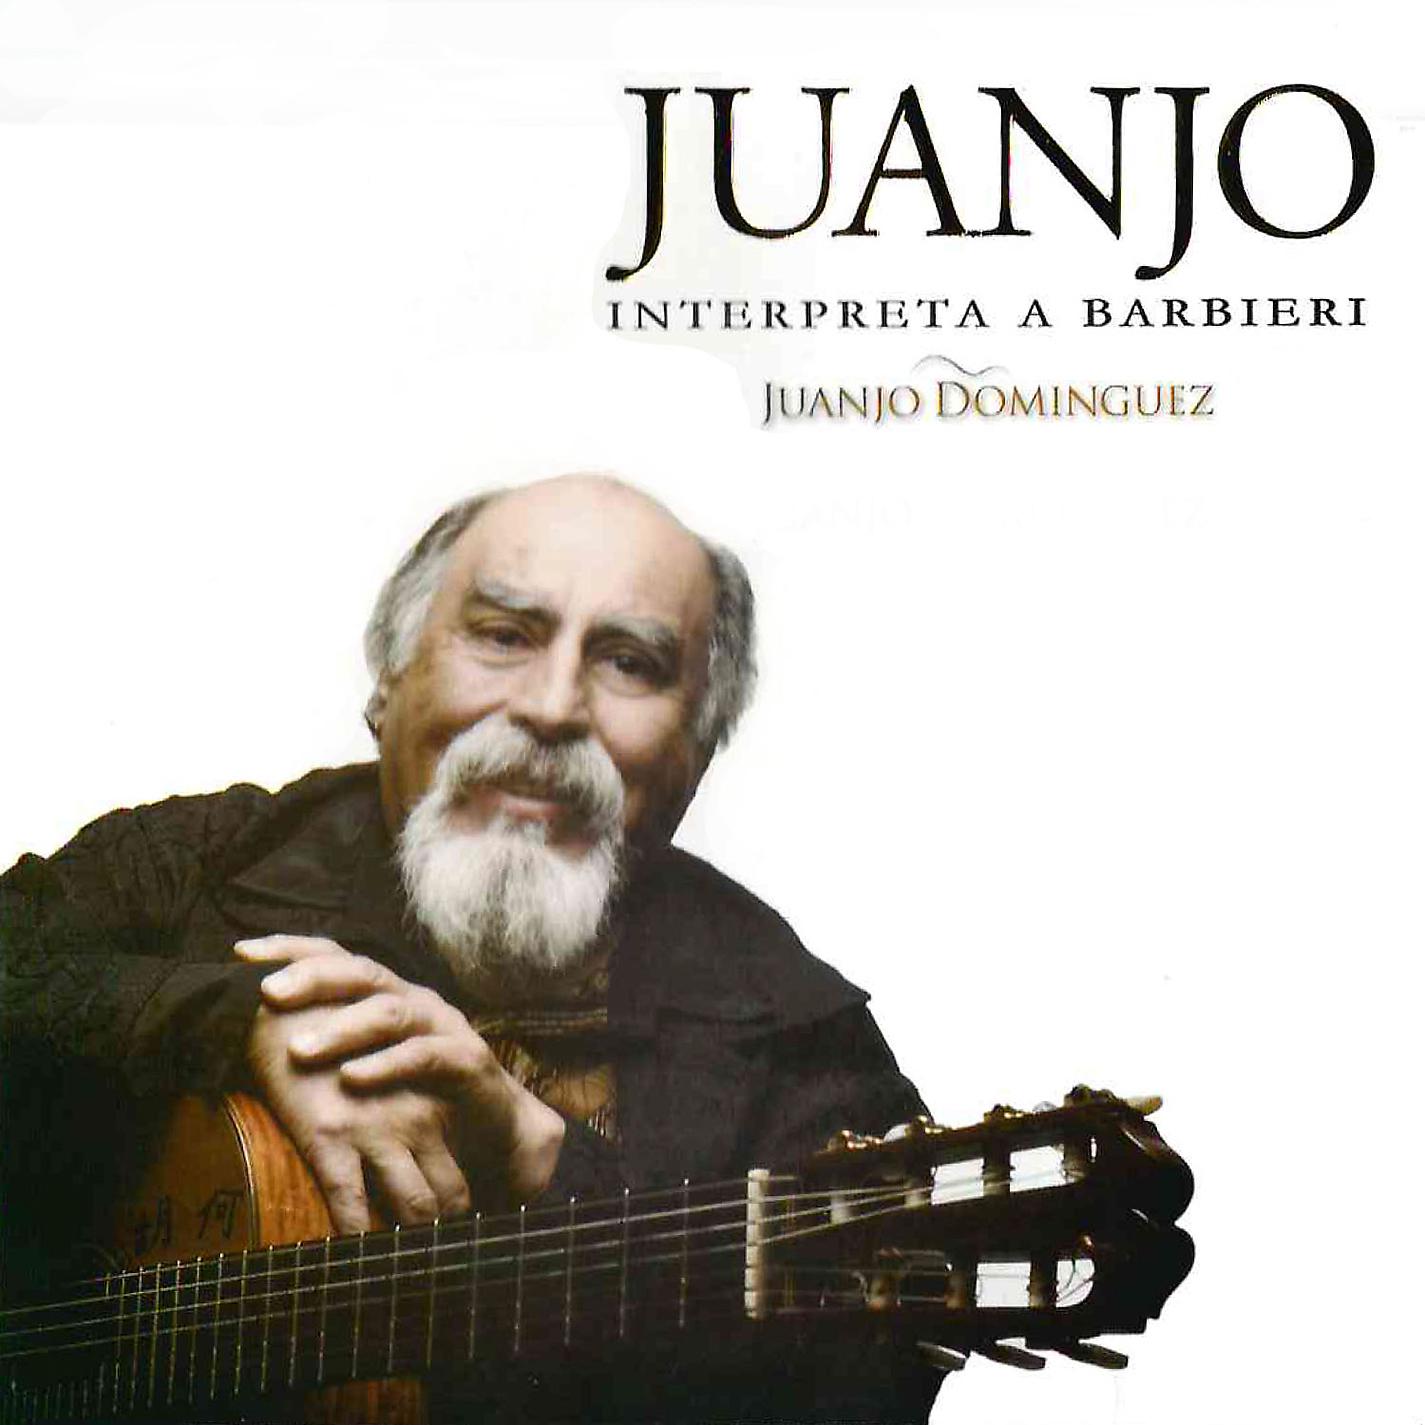 Постер альбома Juanjo Interpreta a Barbieri